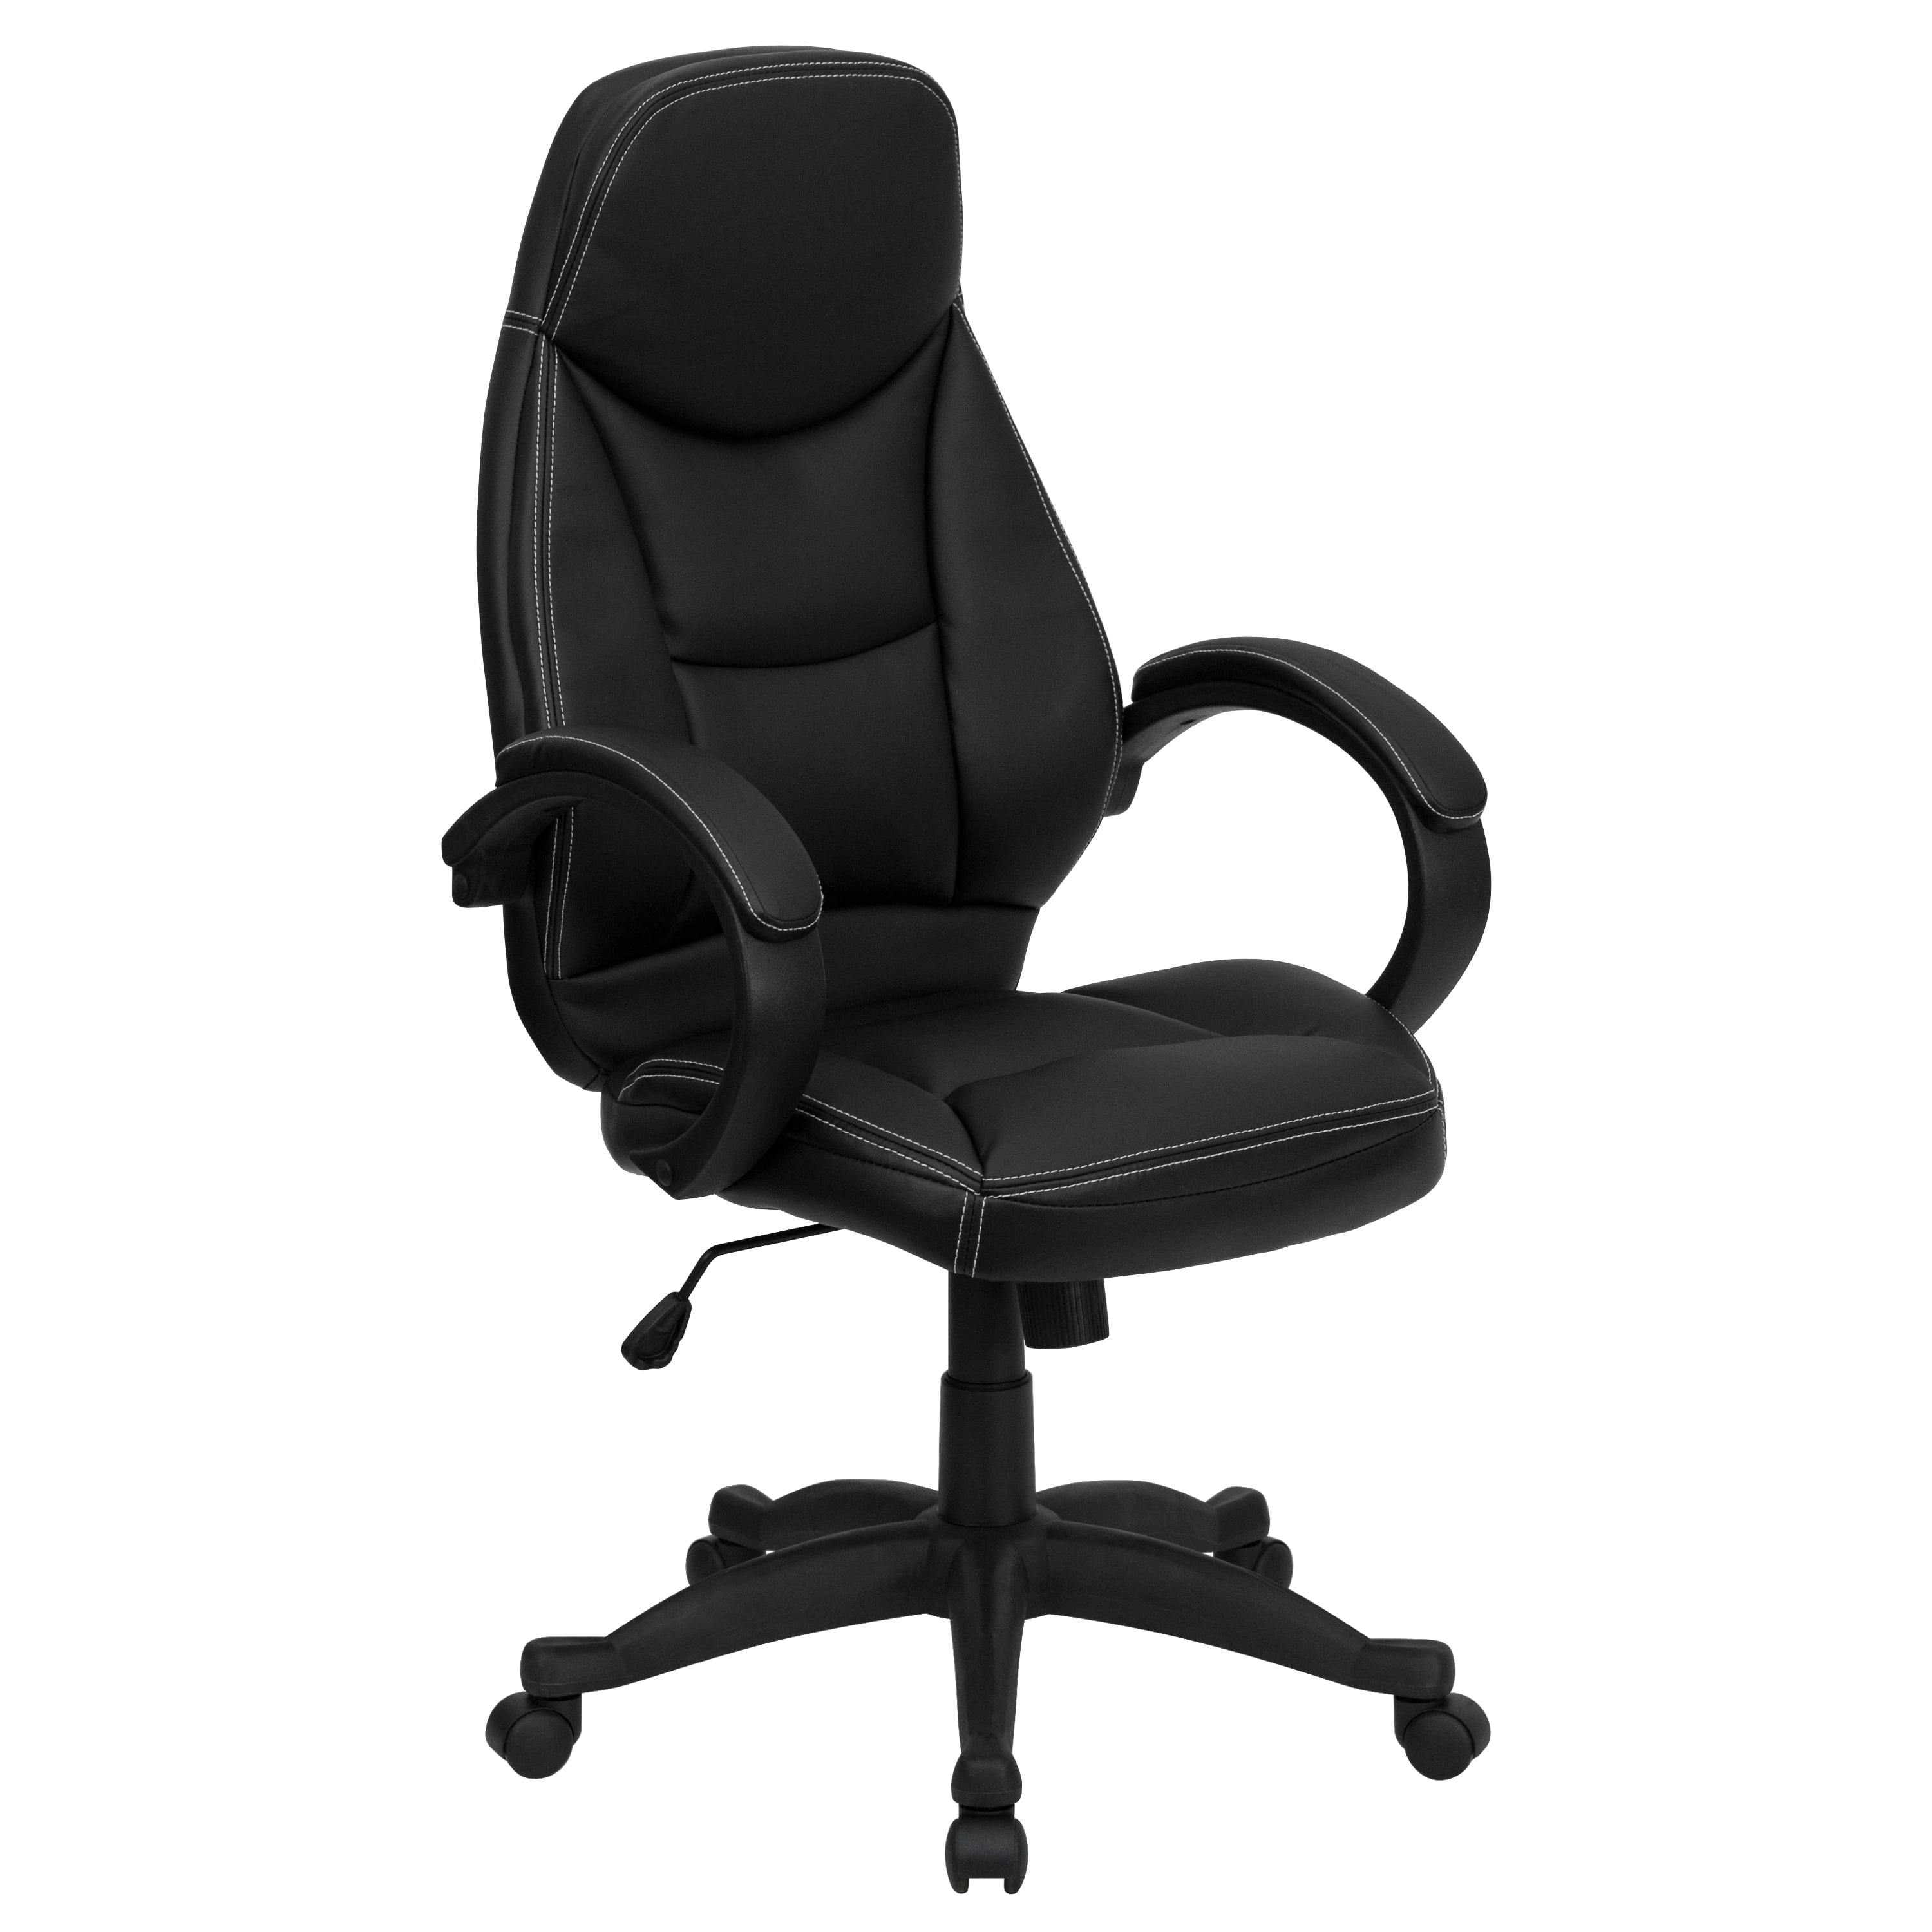 ErgoExecutive High Back Black LeatherSoft Swivel Chair with White Stitching